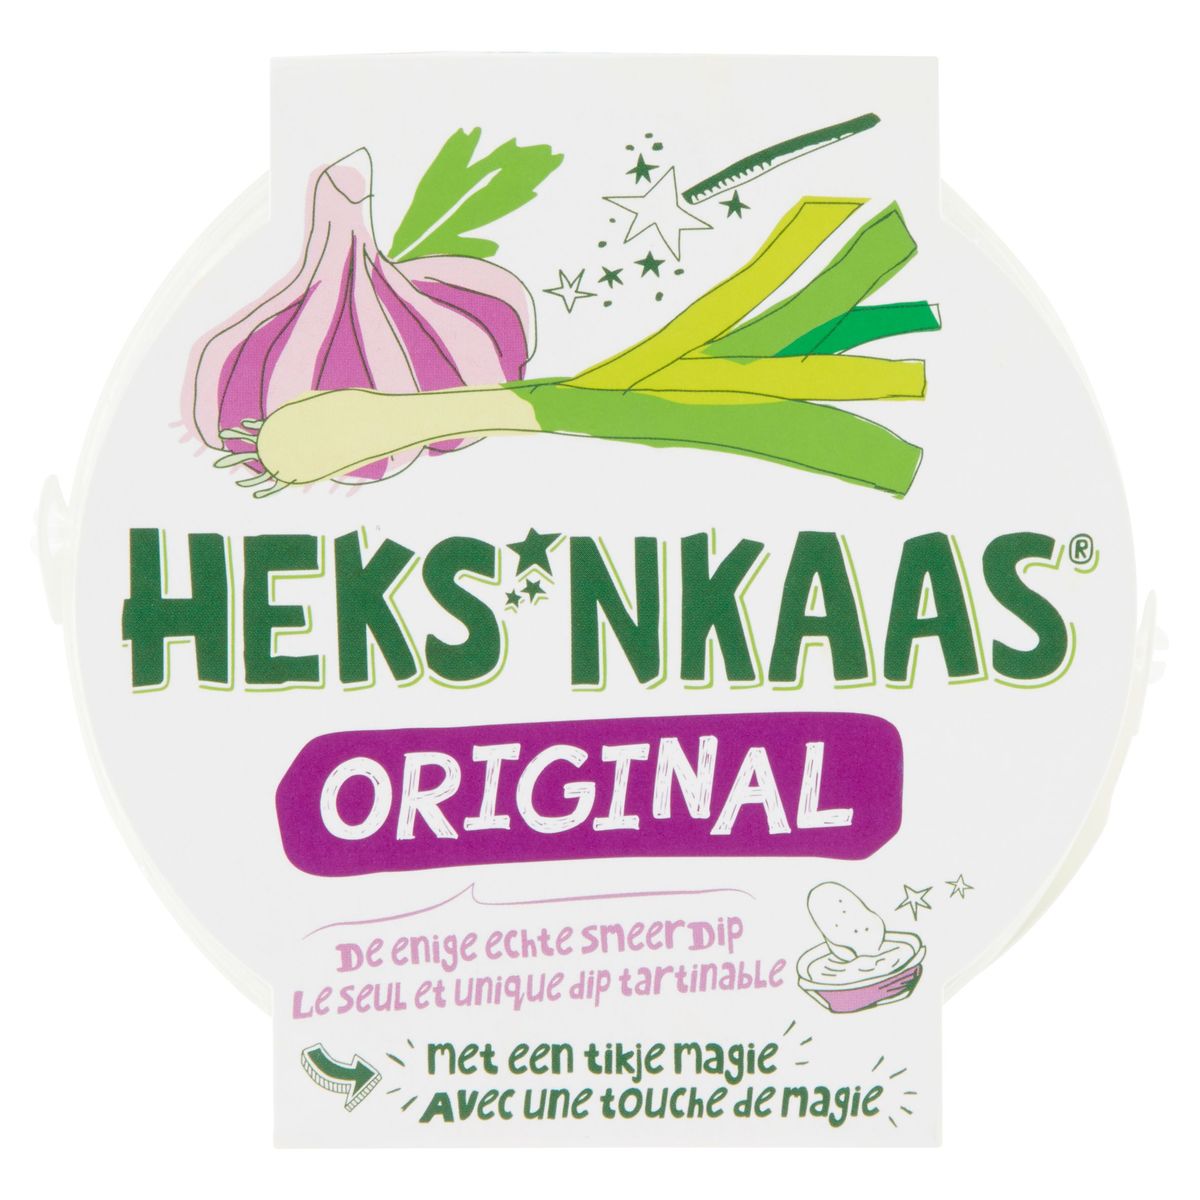 Heks'nkaas Original 200g